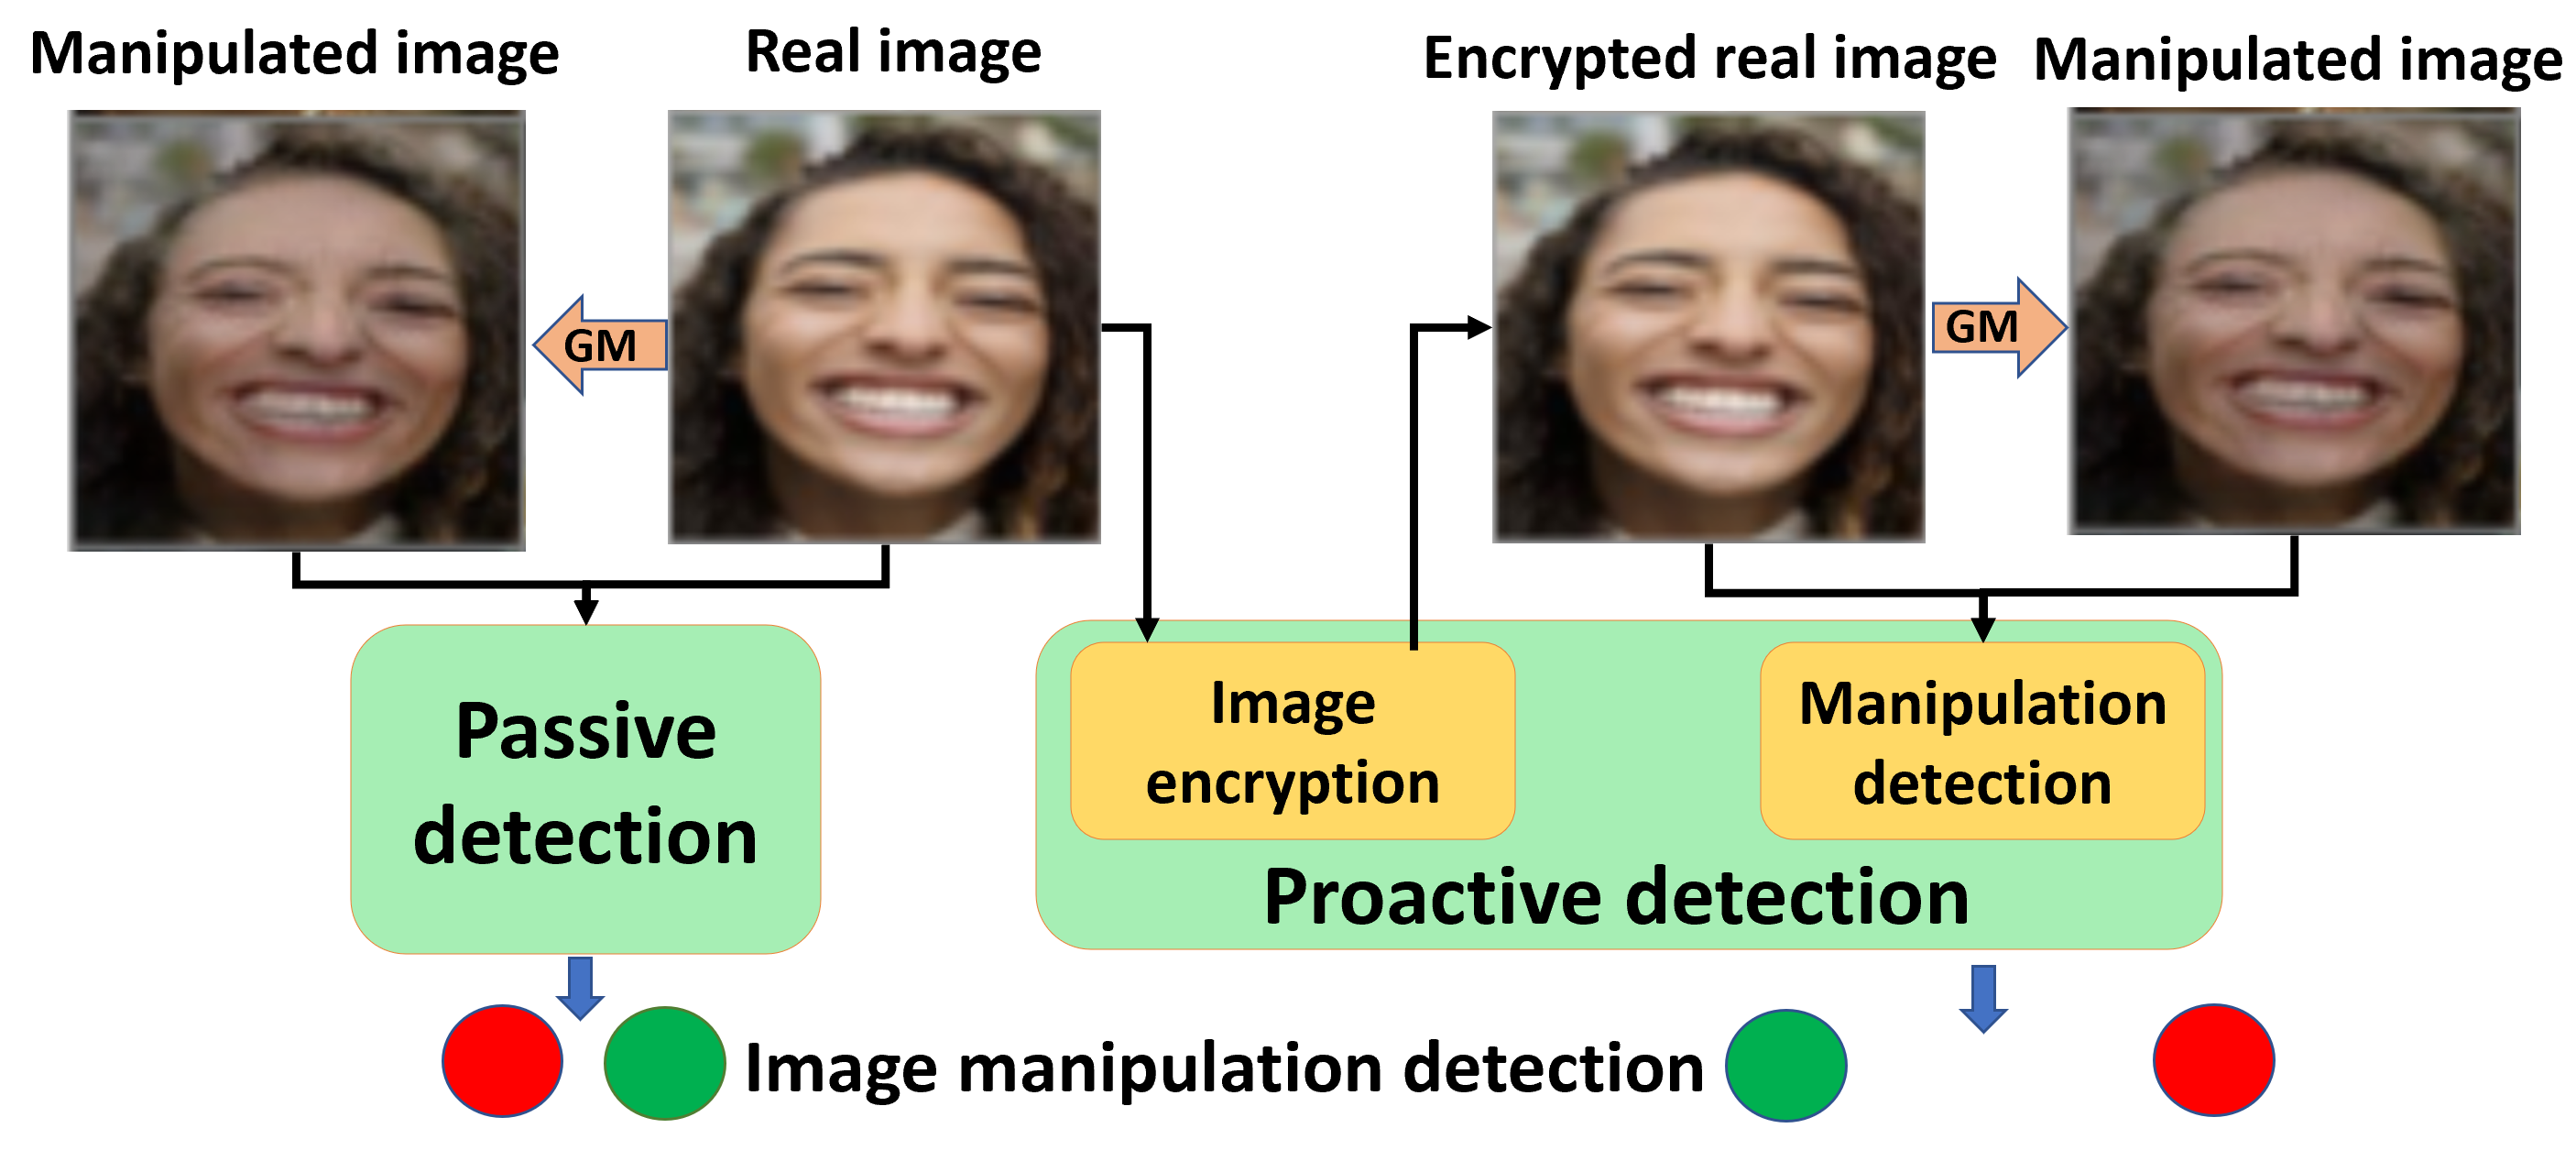 Passive vs. proactive image manipulation detection